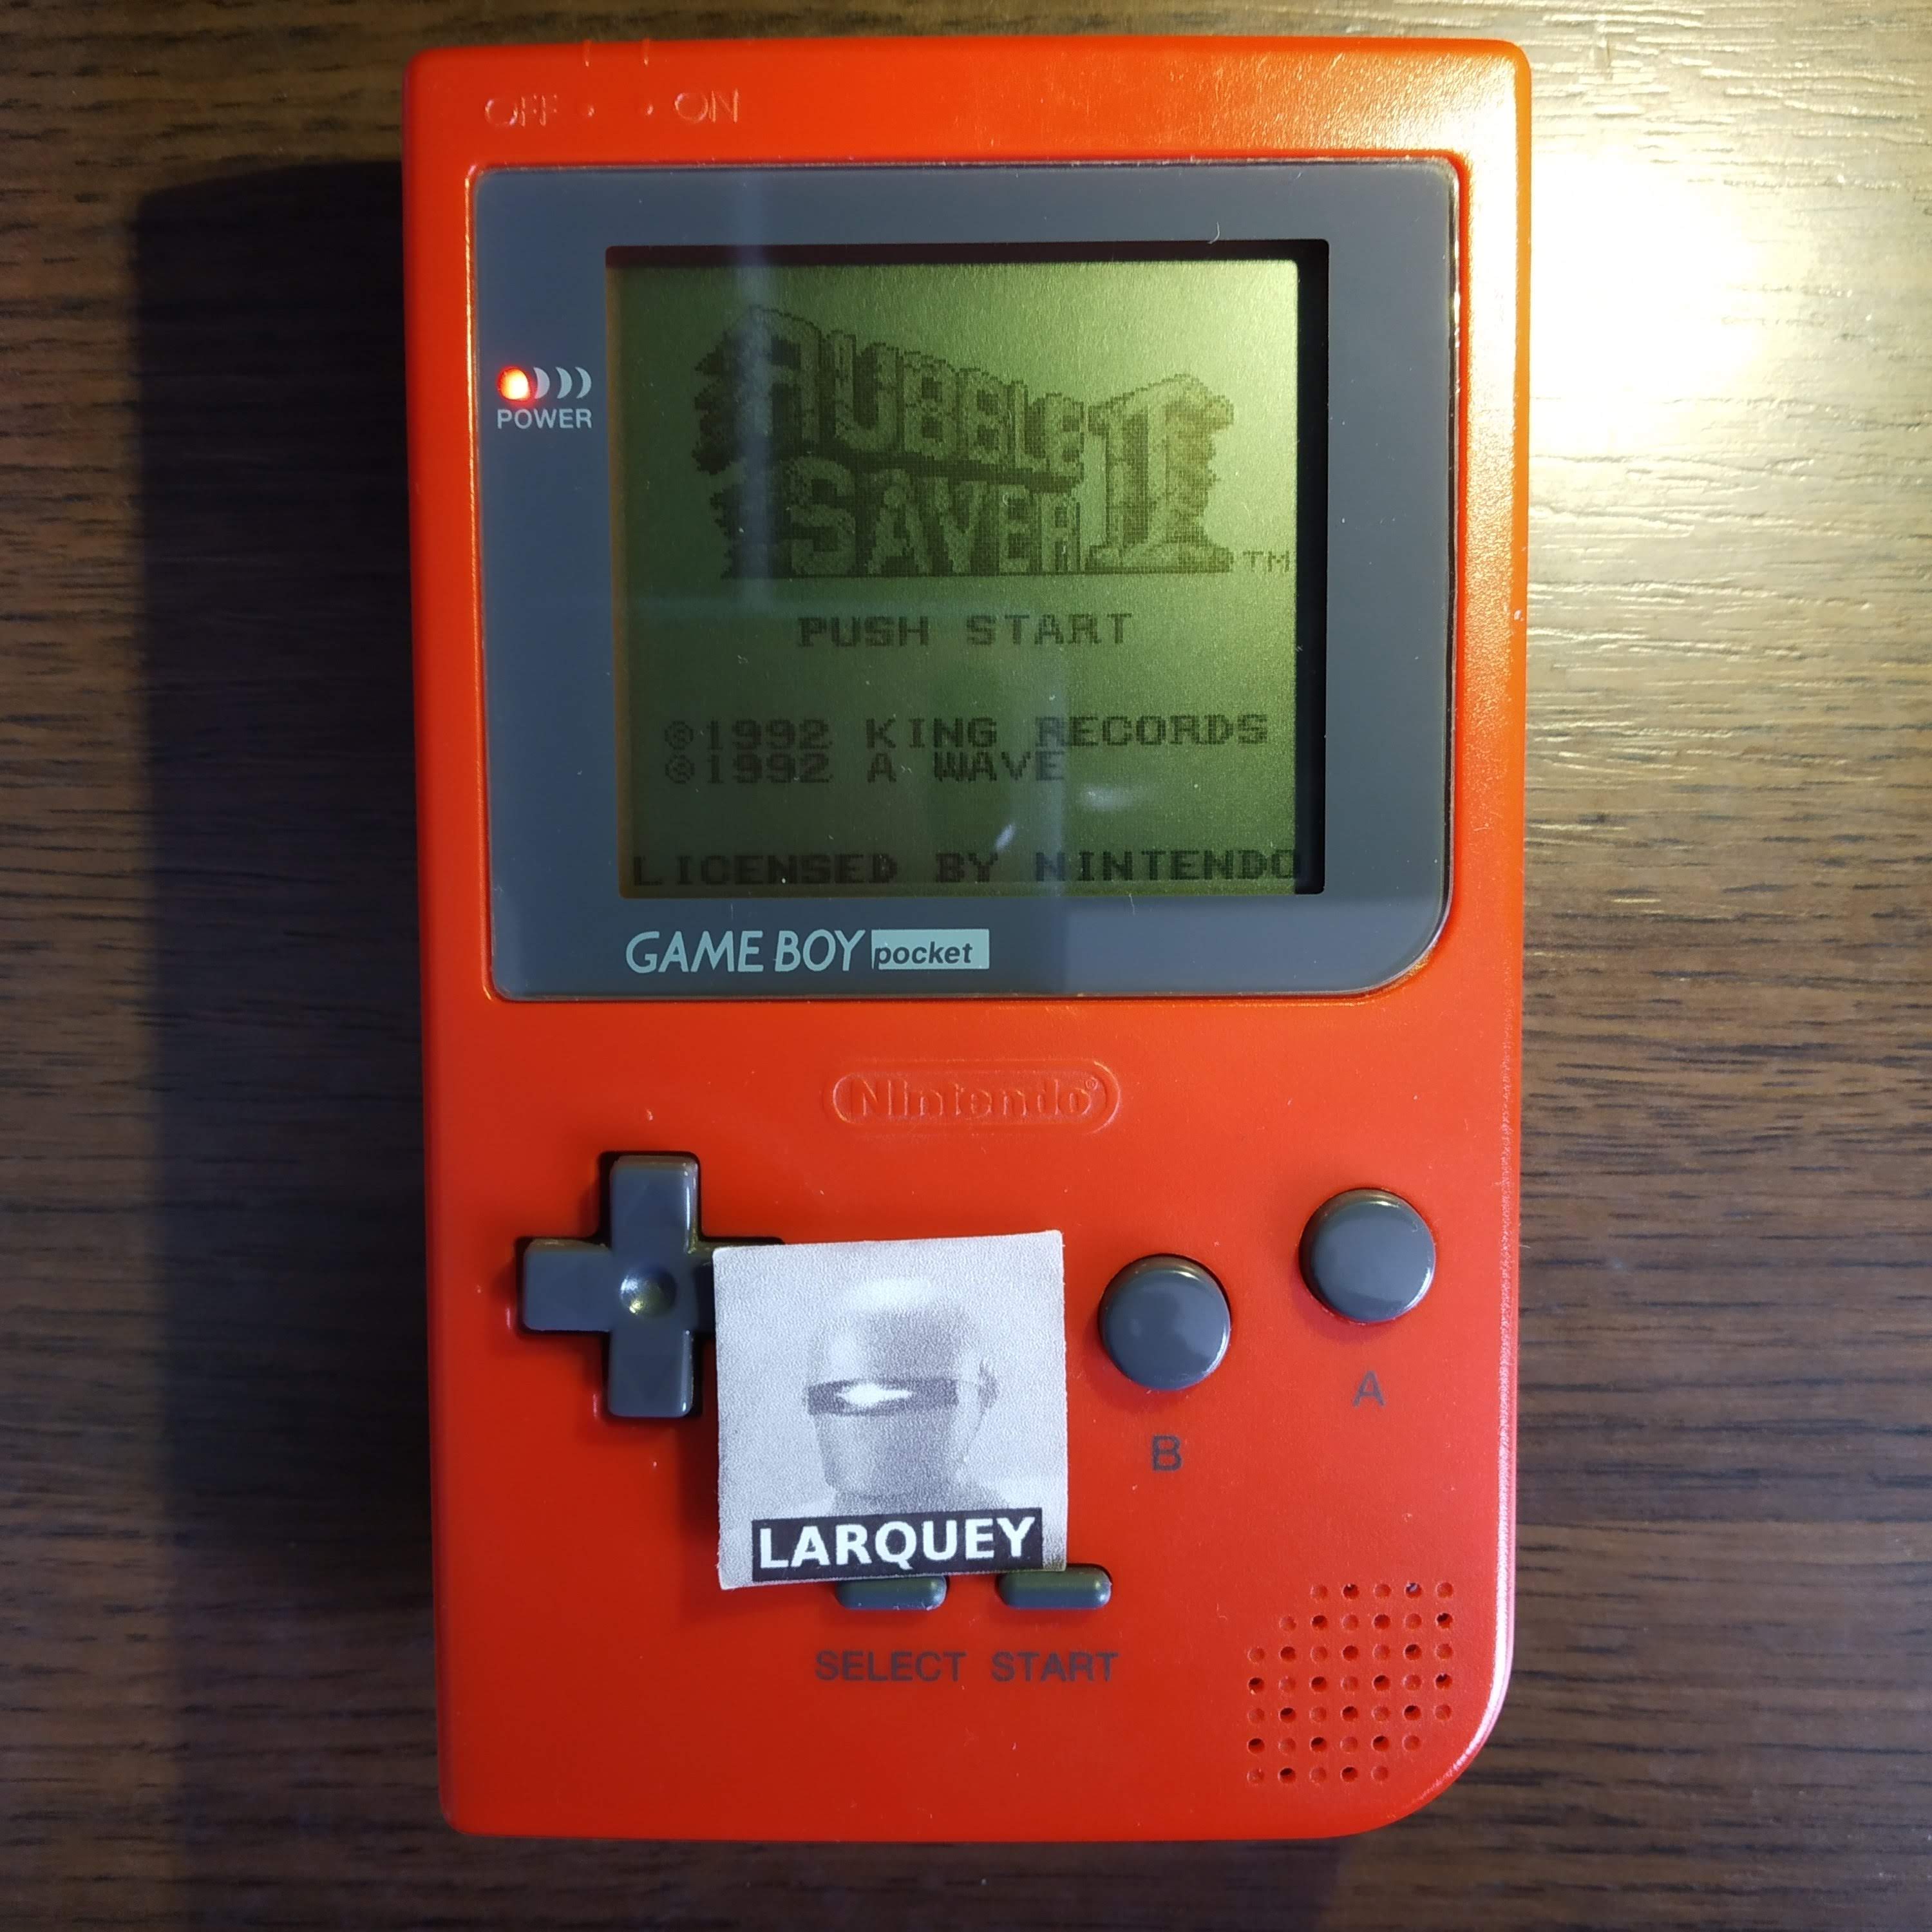 Larquey: Rubble Saver II (Game Boy) 2,052 points on 2020-05-02 09:50:14